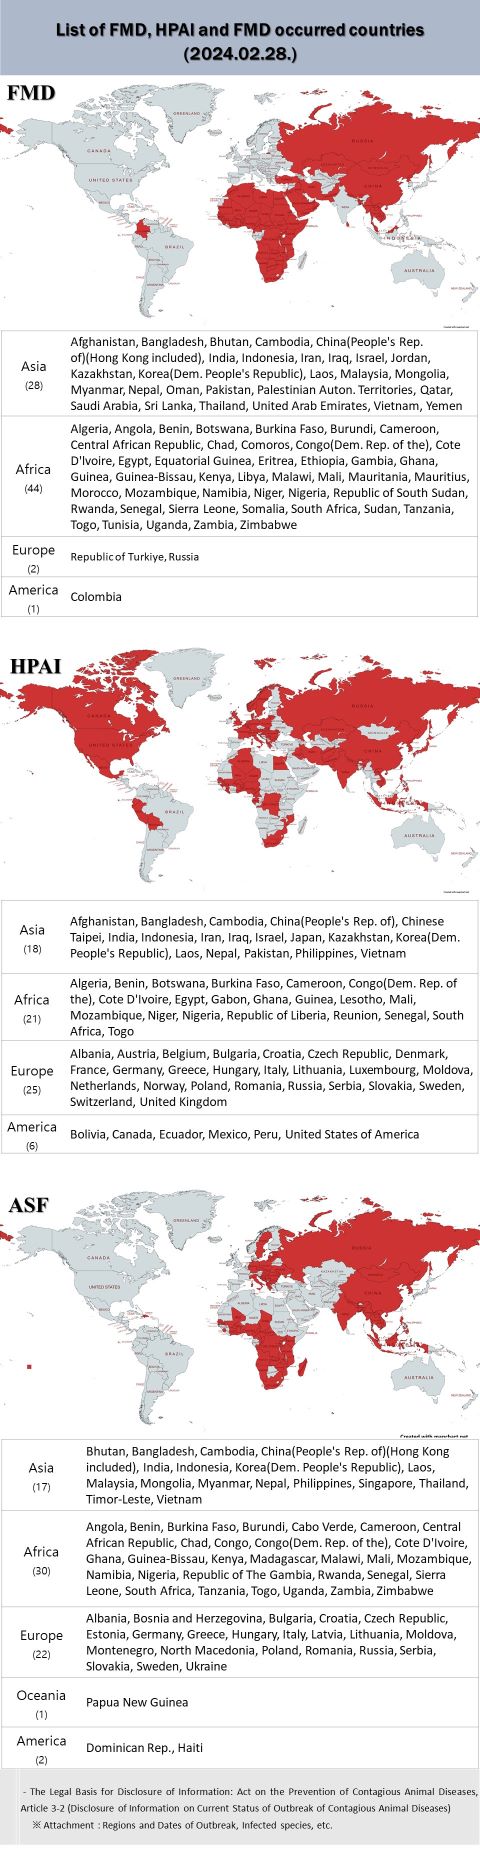 List of countries regarding specific animal disease outbreak